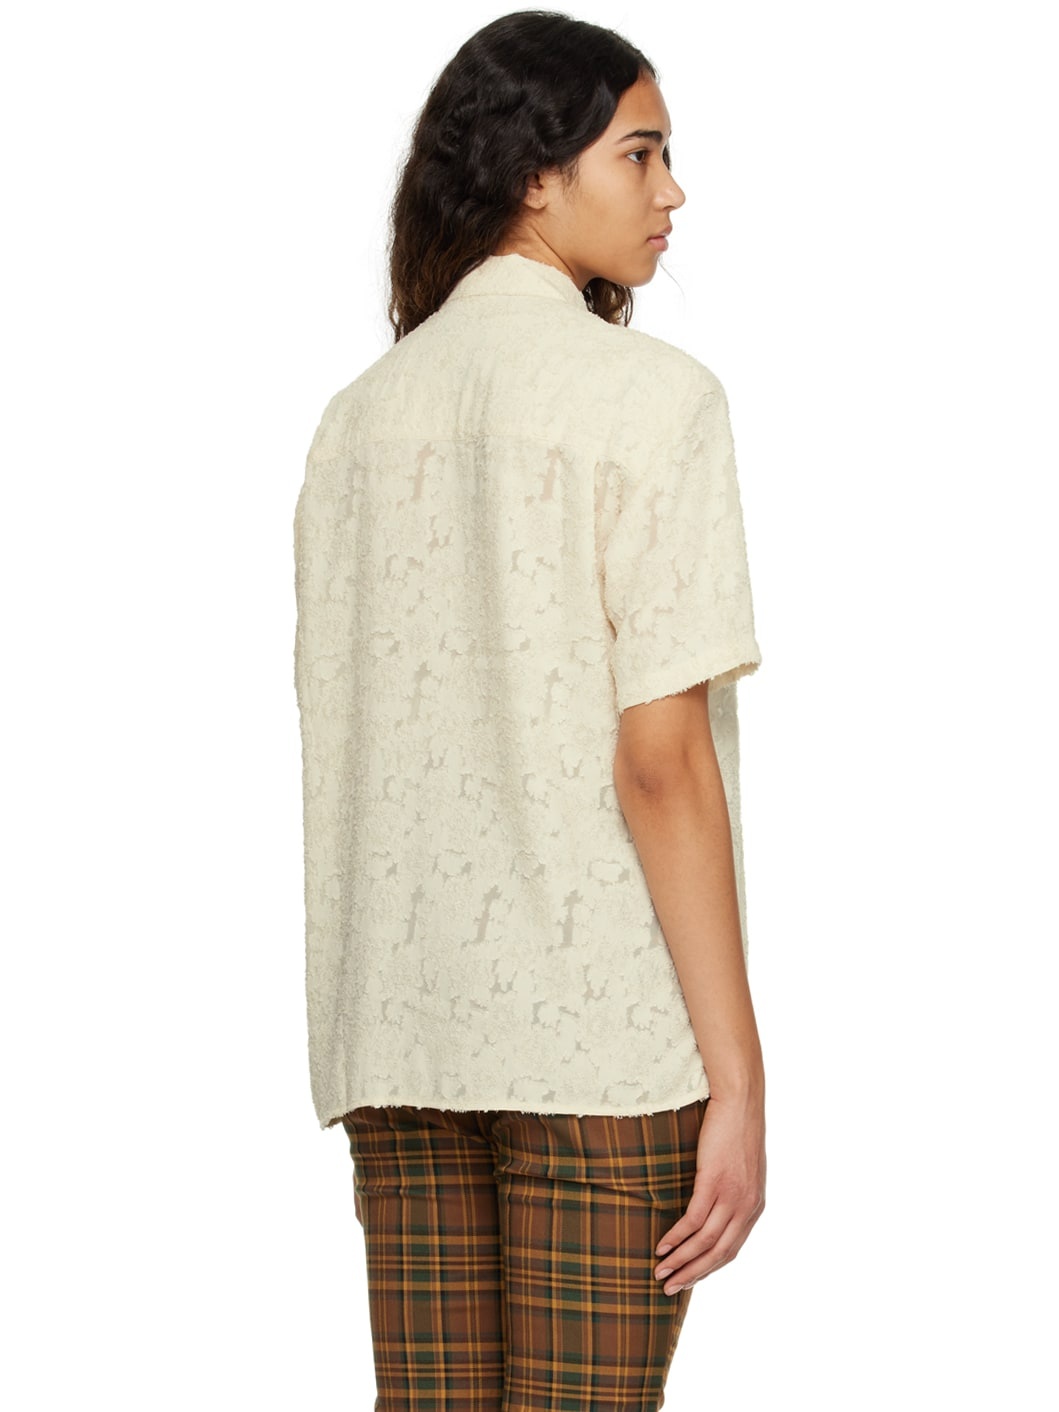 Off-White Bali Shirt - 3